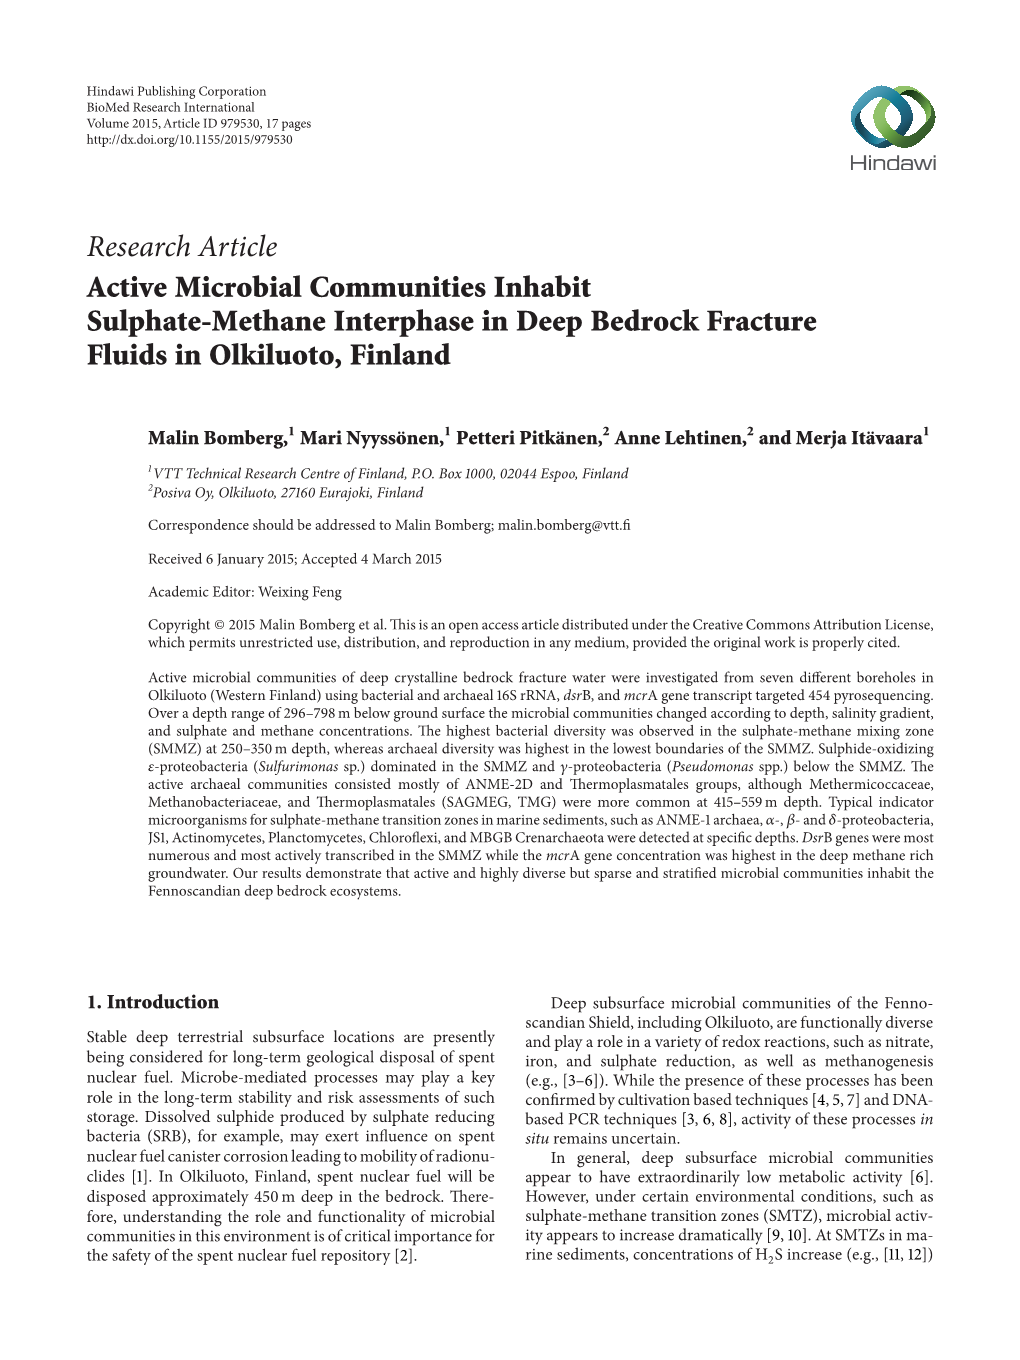 Active Microbial Communities Inhabit Sulphate-Methane Interphase in Deep Bedrock Fracture Fluids in Olkiluoto, Finland